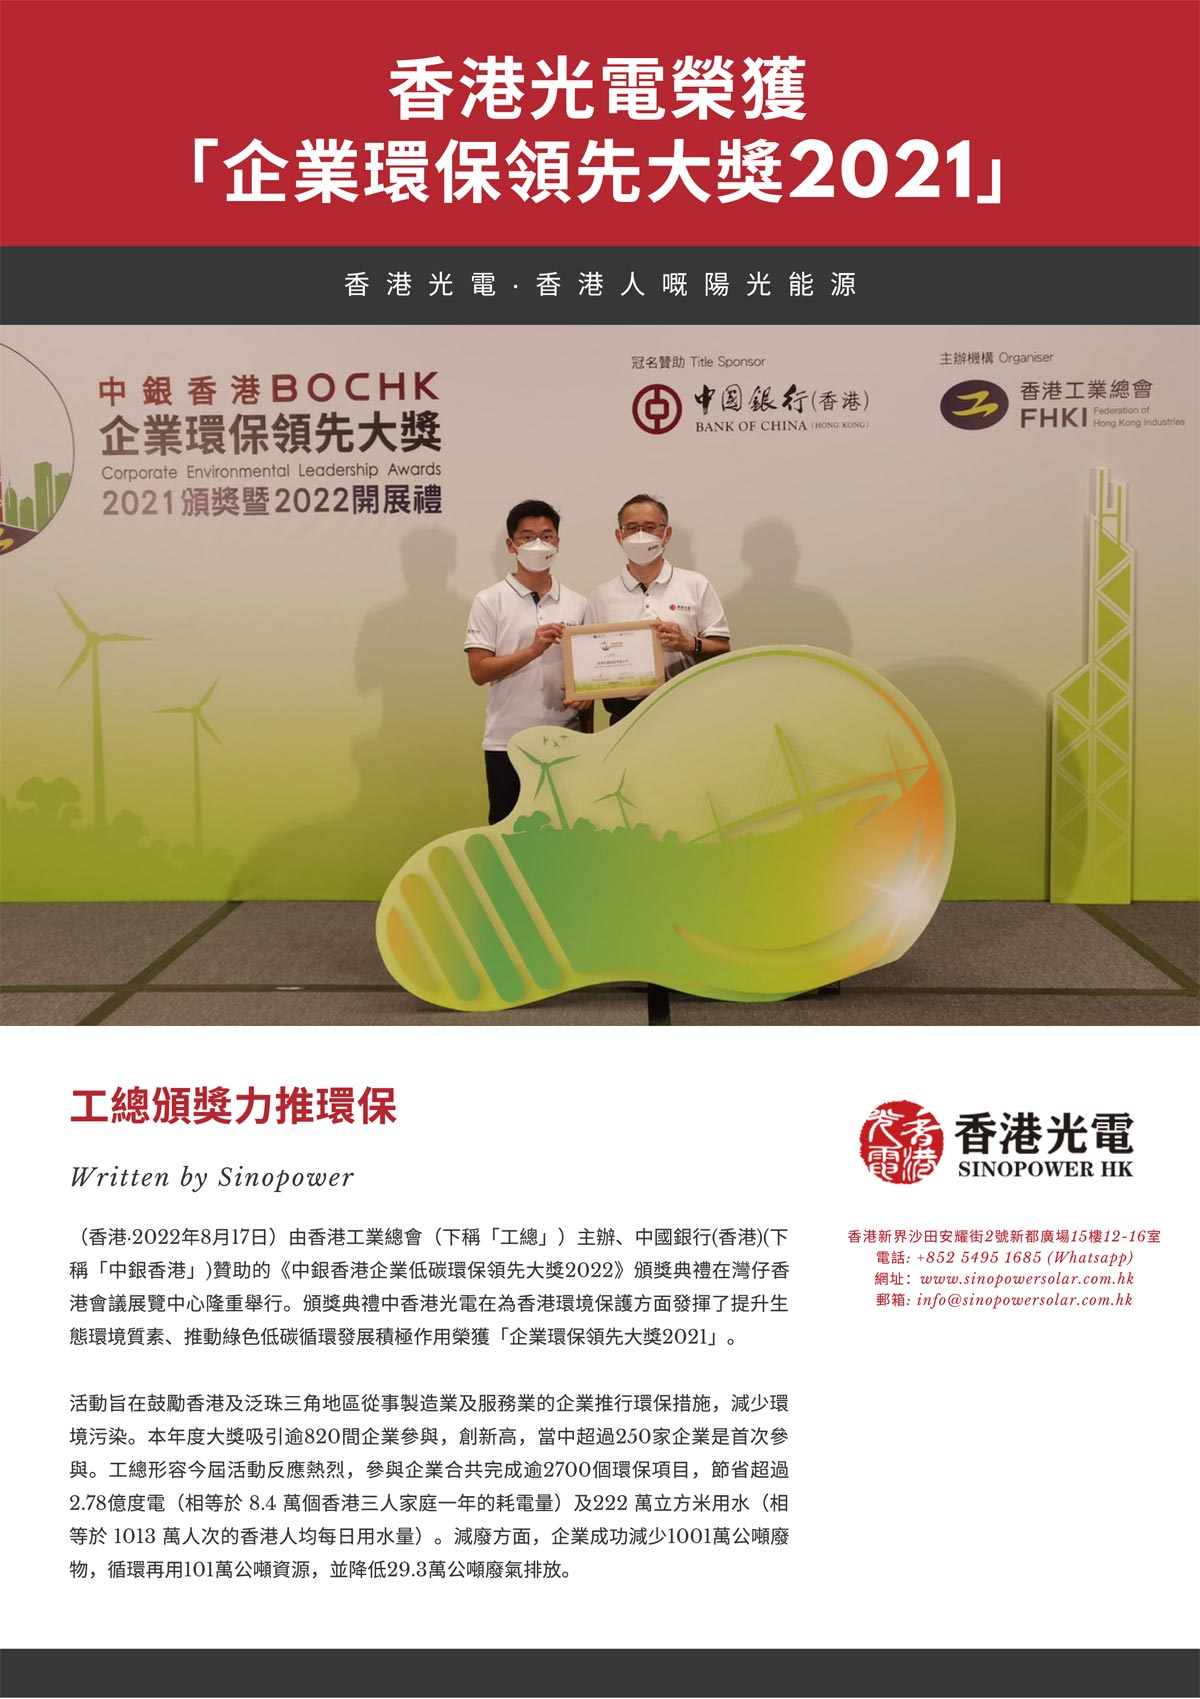 SP-Newsletter-202208期-香港光電榮獲「企業環保領先大獎2021」-1.jpg